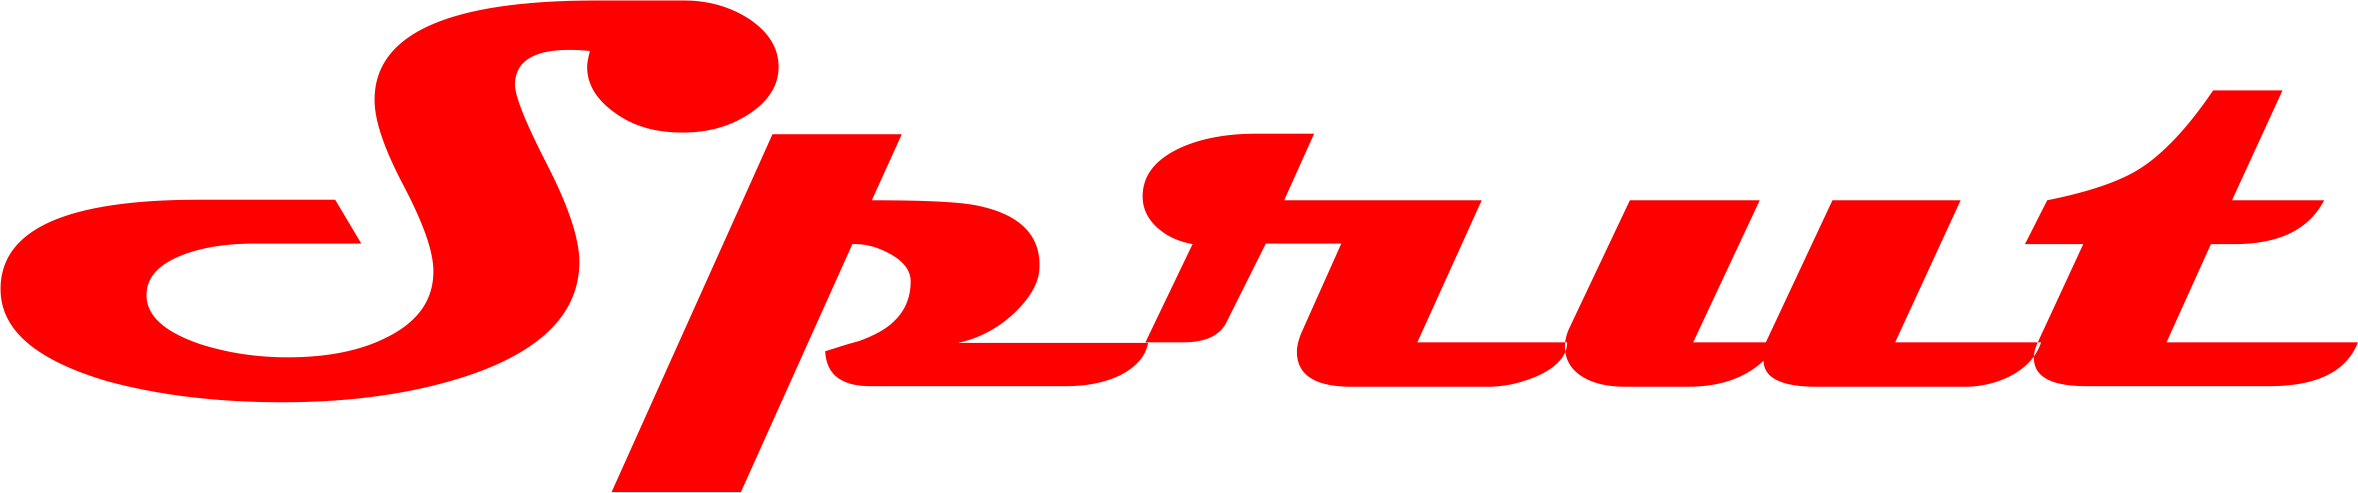 логотип sprut